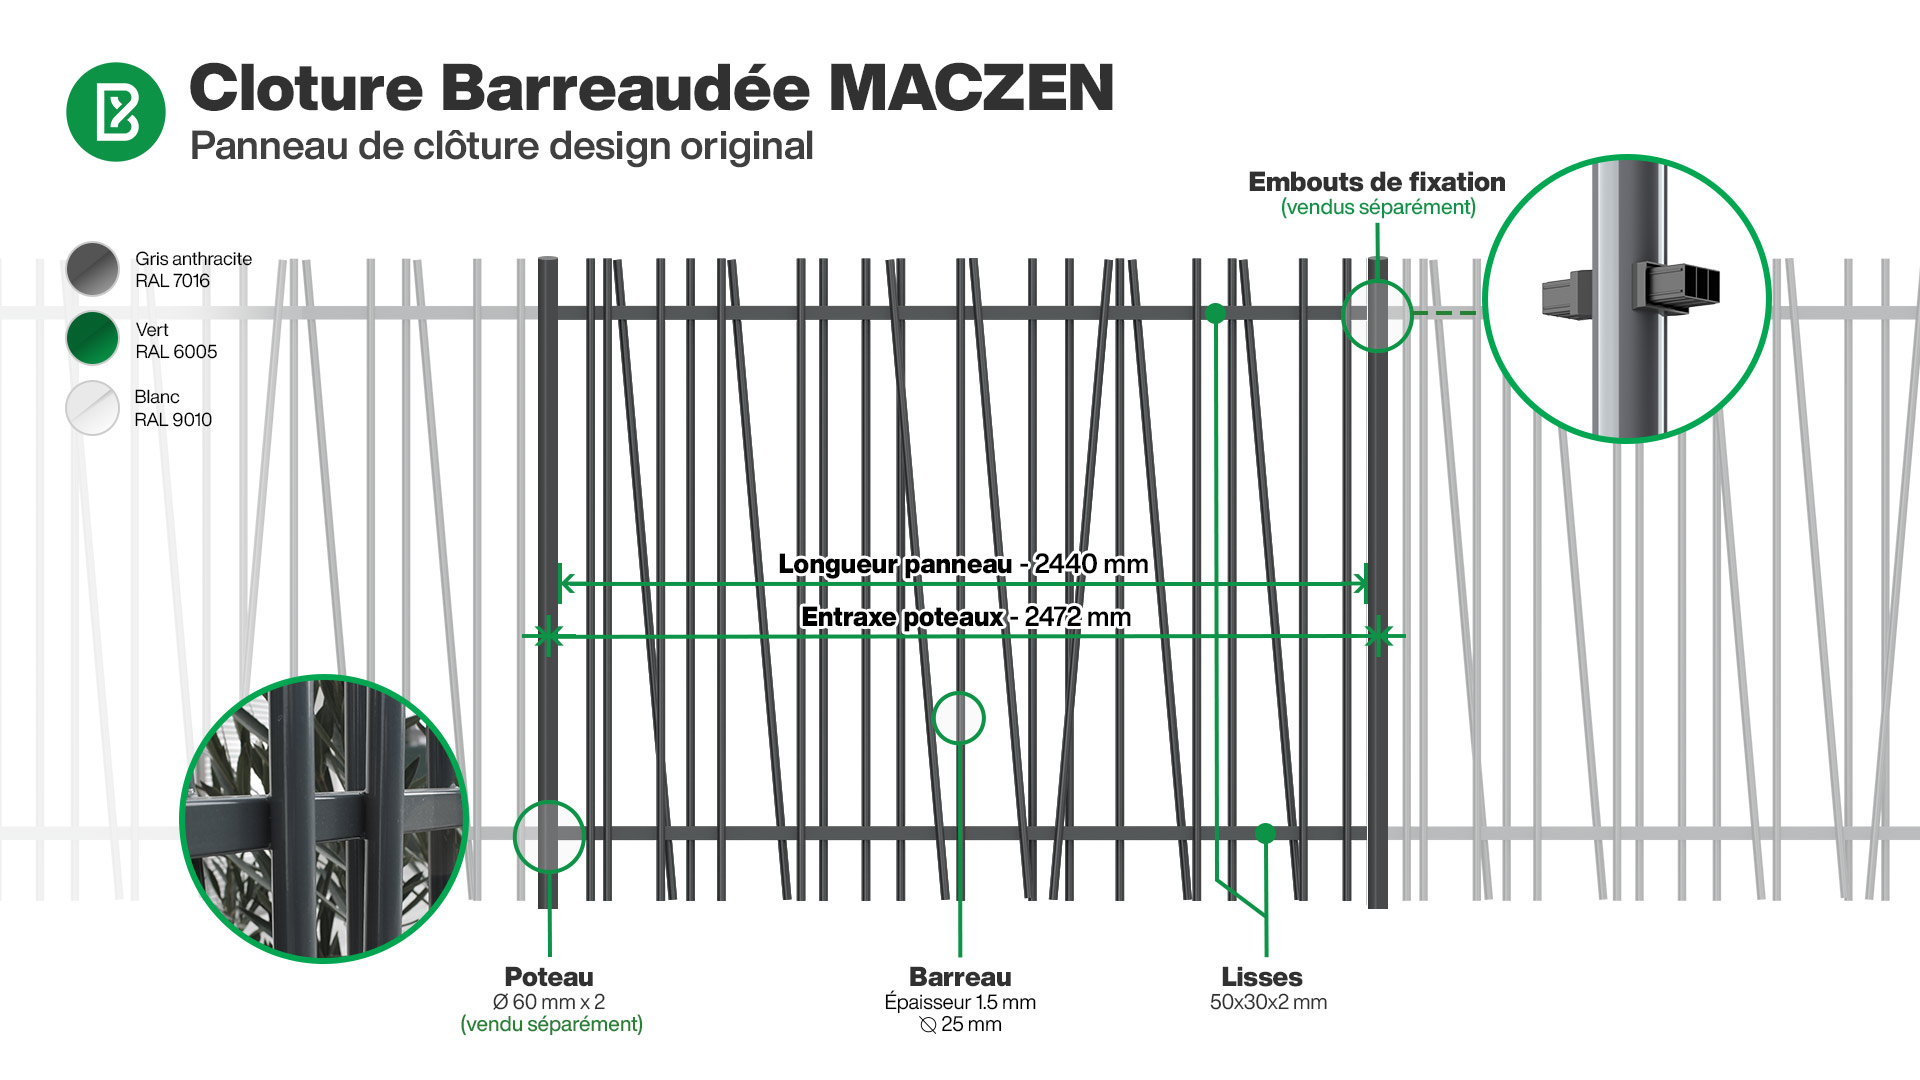 Cloture : Infographie d'une clôture barreaudée MACZEN